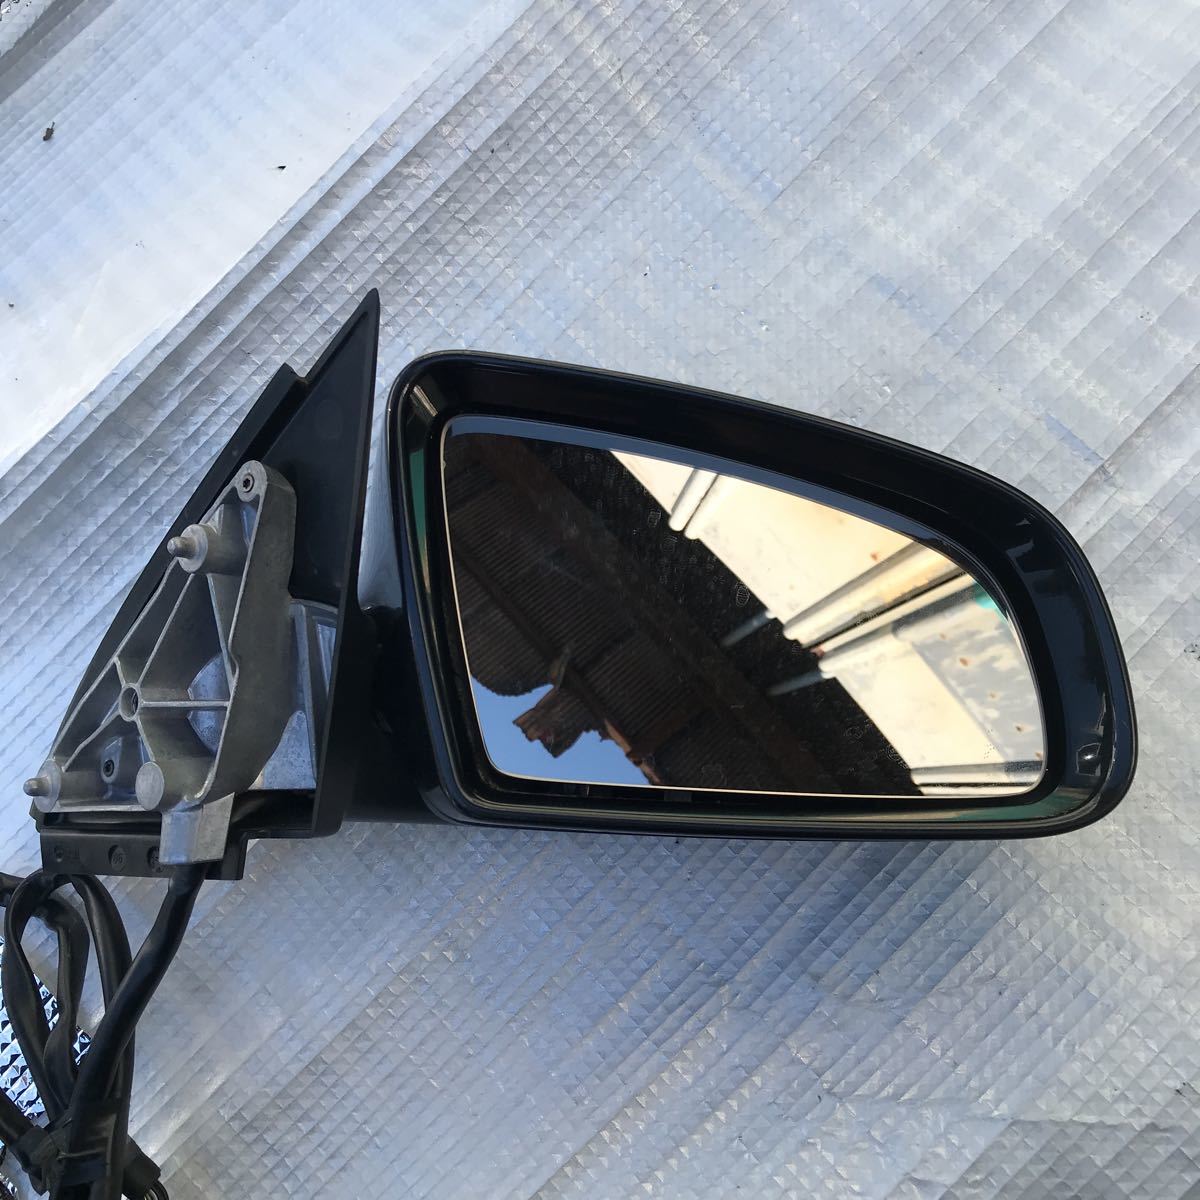  Audi 8EALT A4 right door mirror operation verification ending prompt decision black 